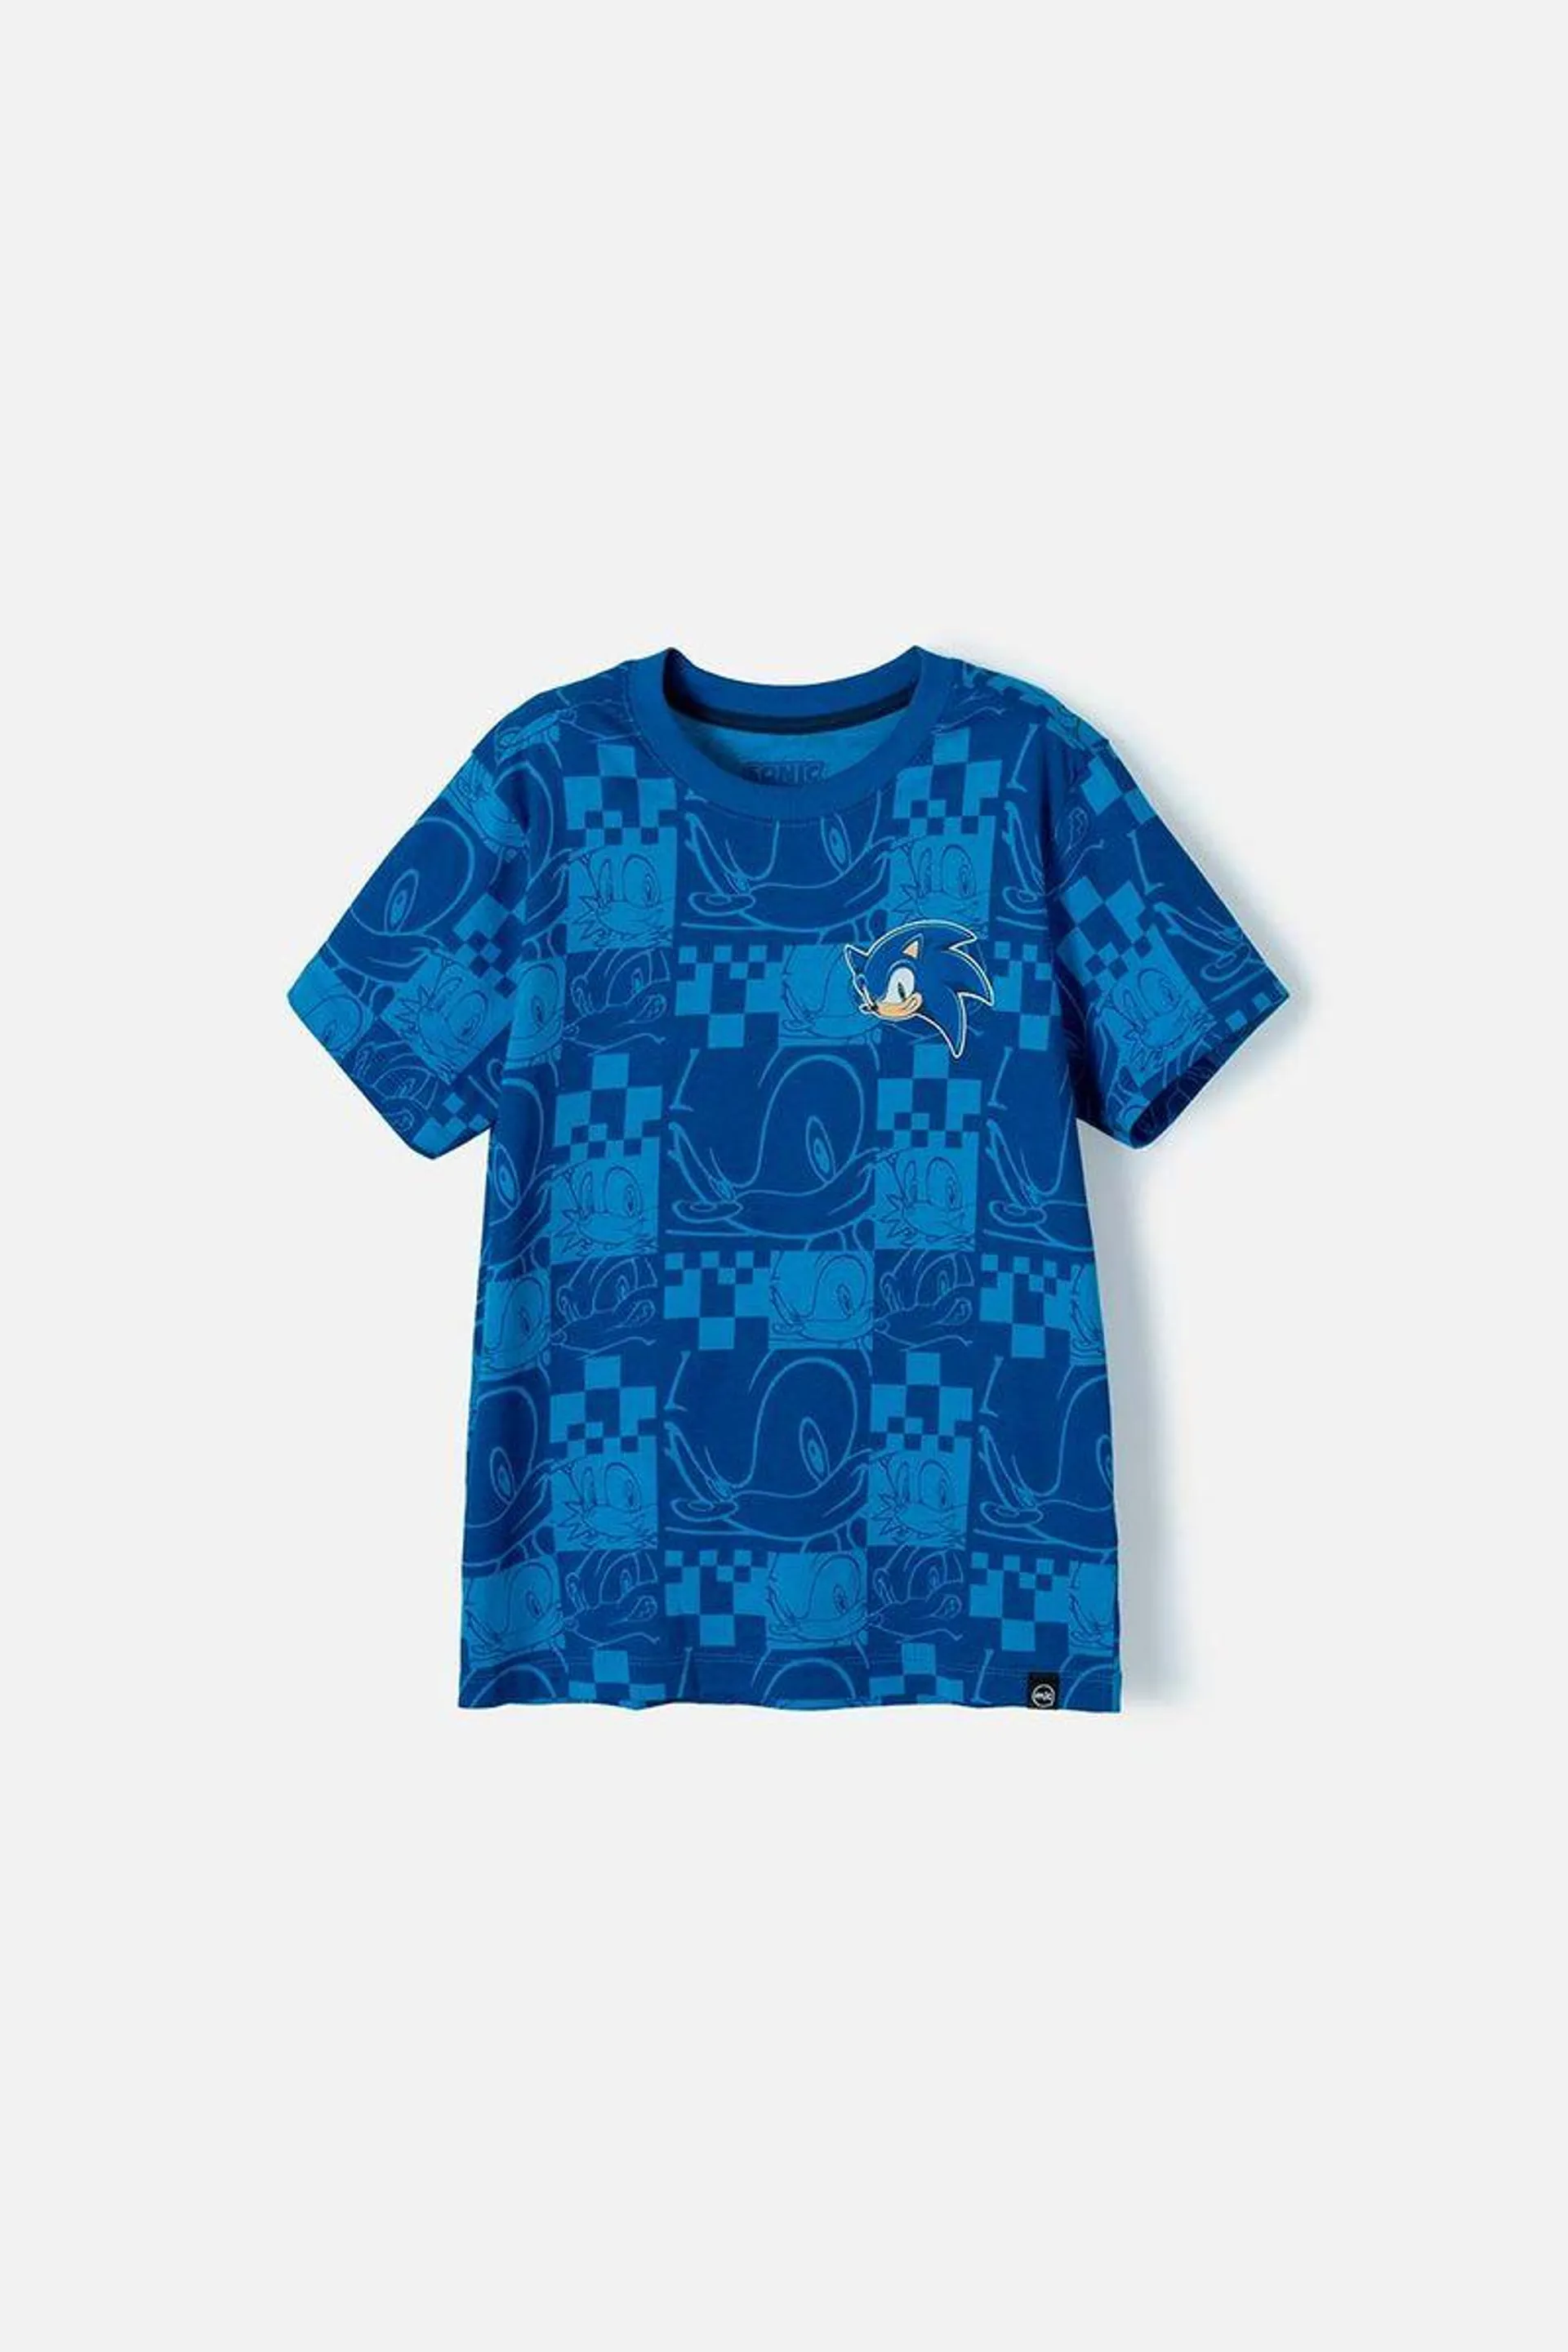 Camiseta de Sonic azul manga corta para niño